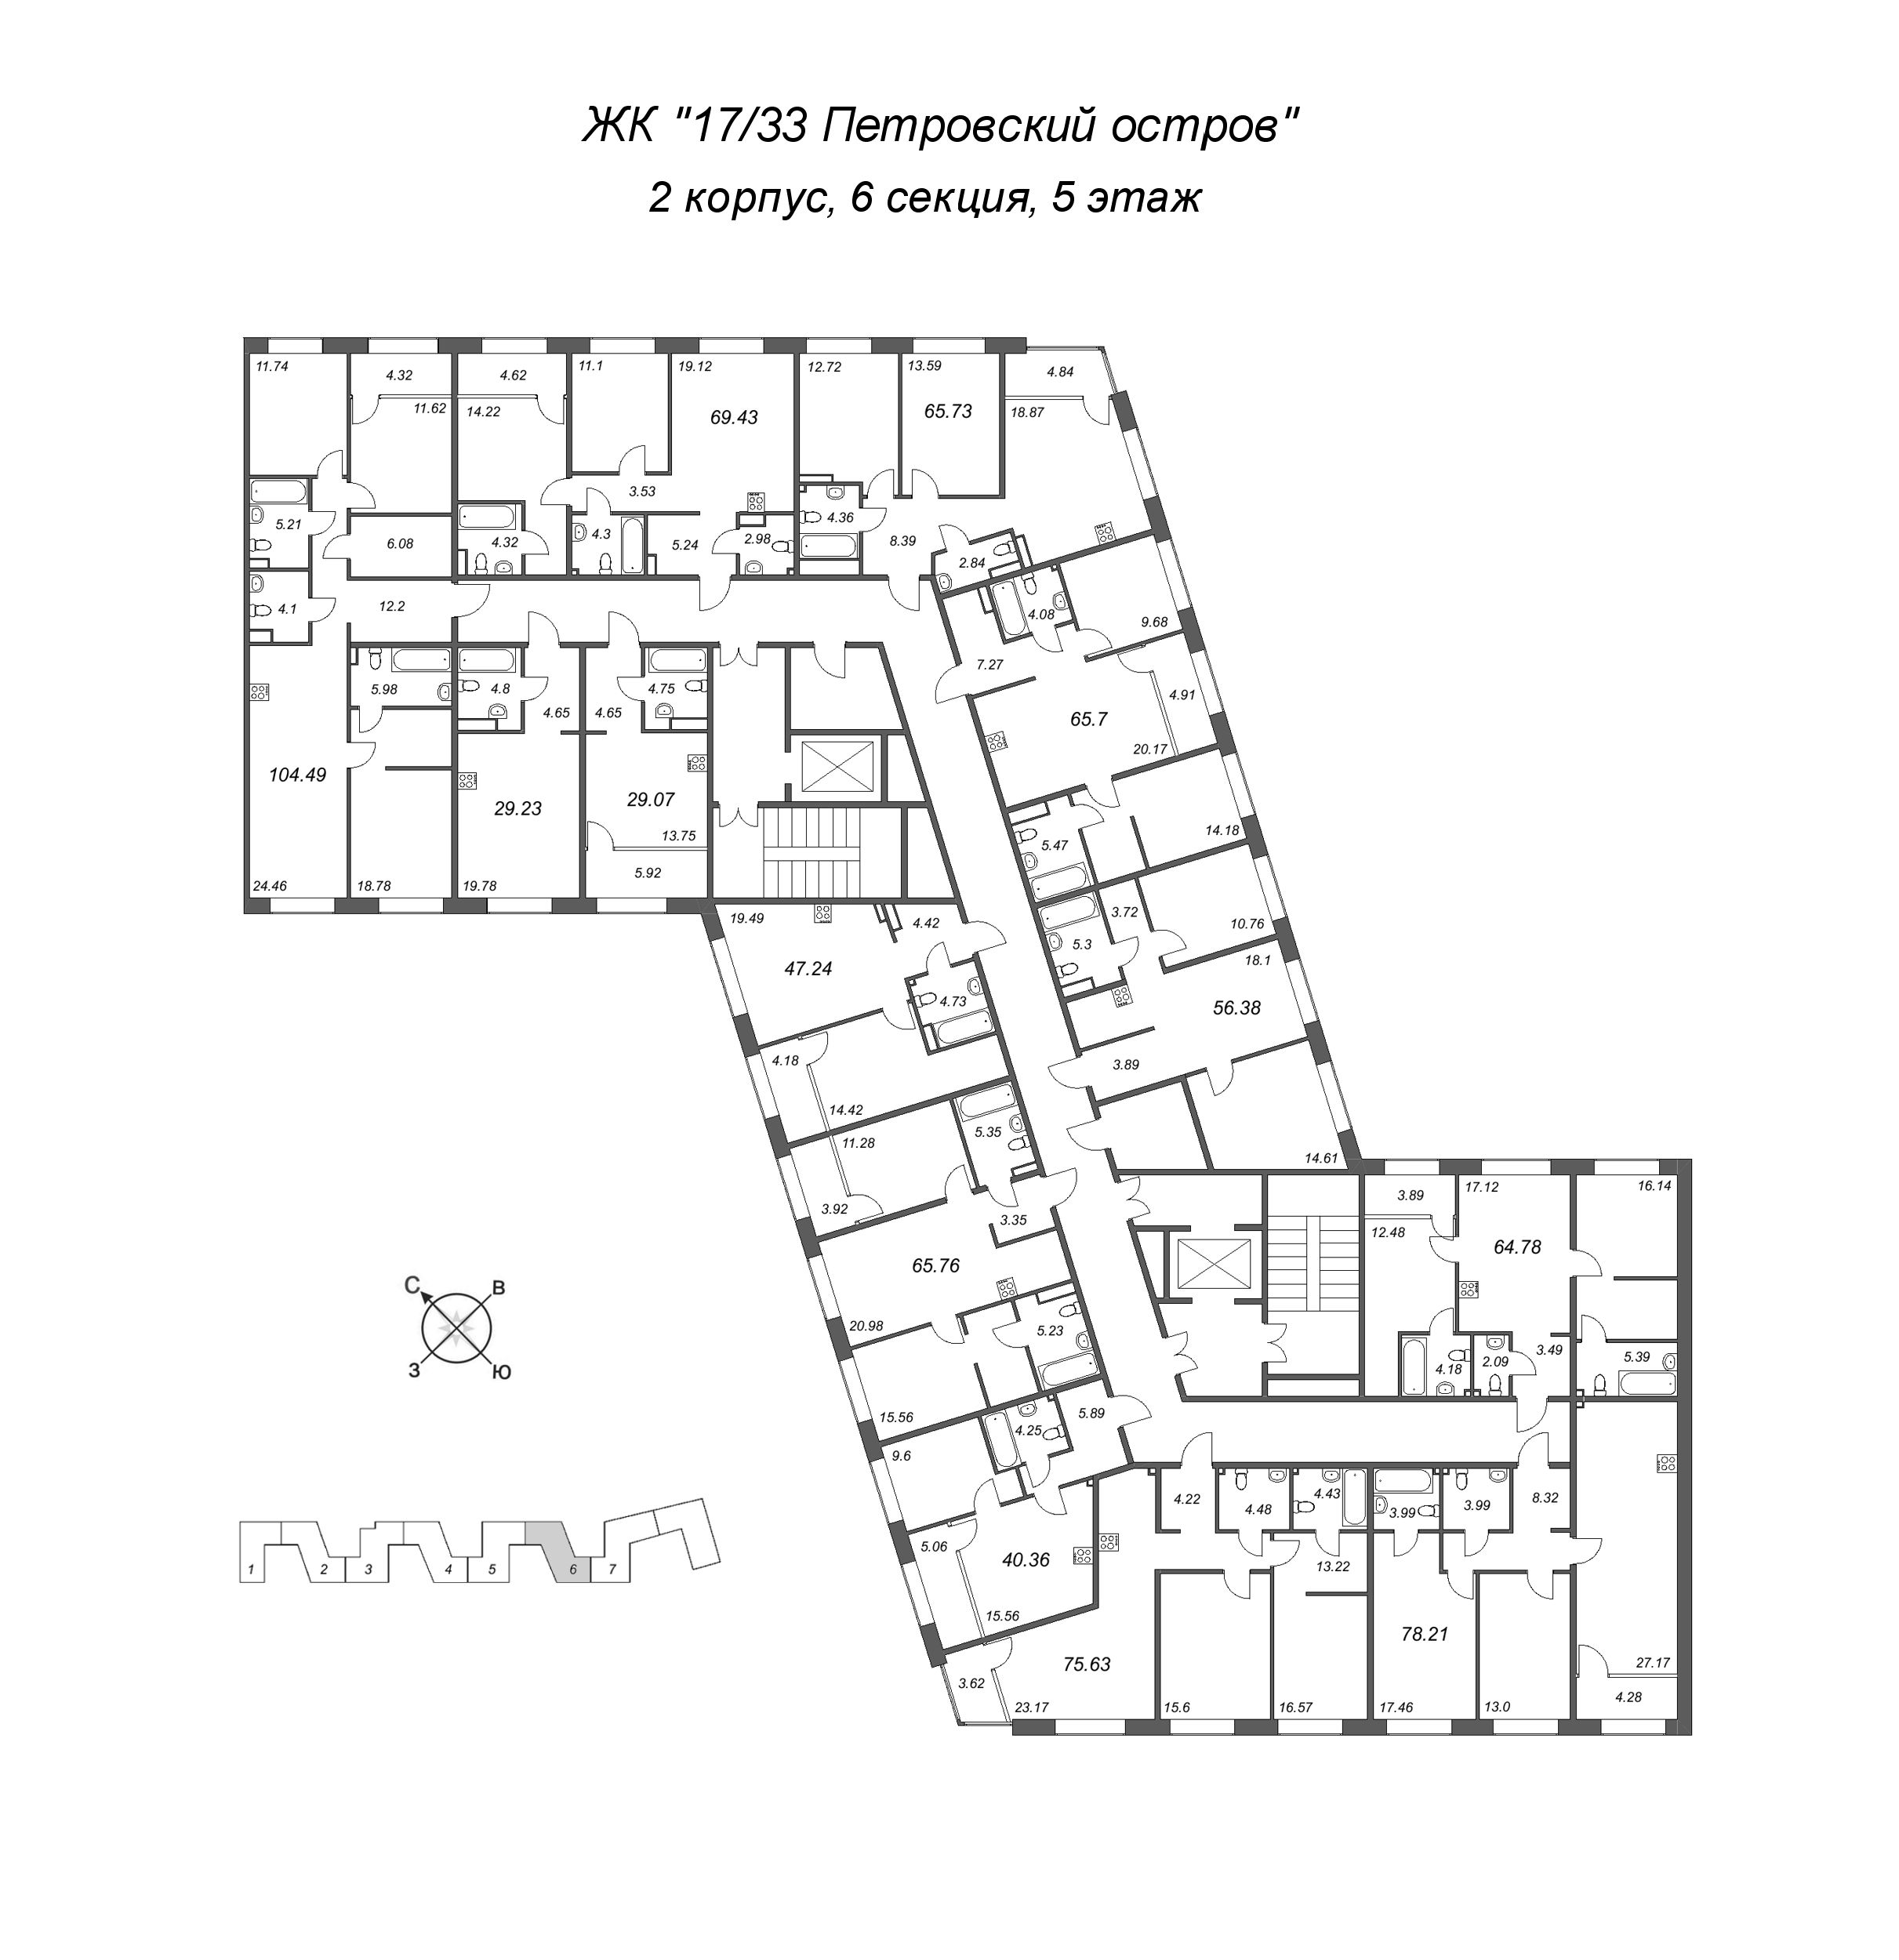 3-комнатная (Евро) квартира, 65.73 м² - планировка этажа